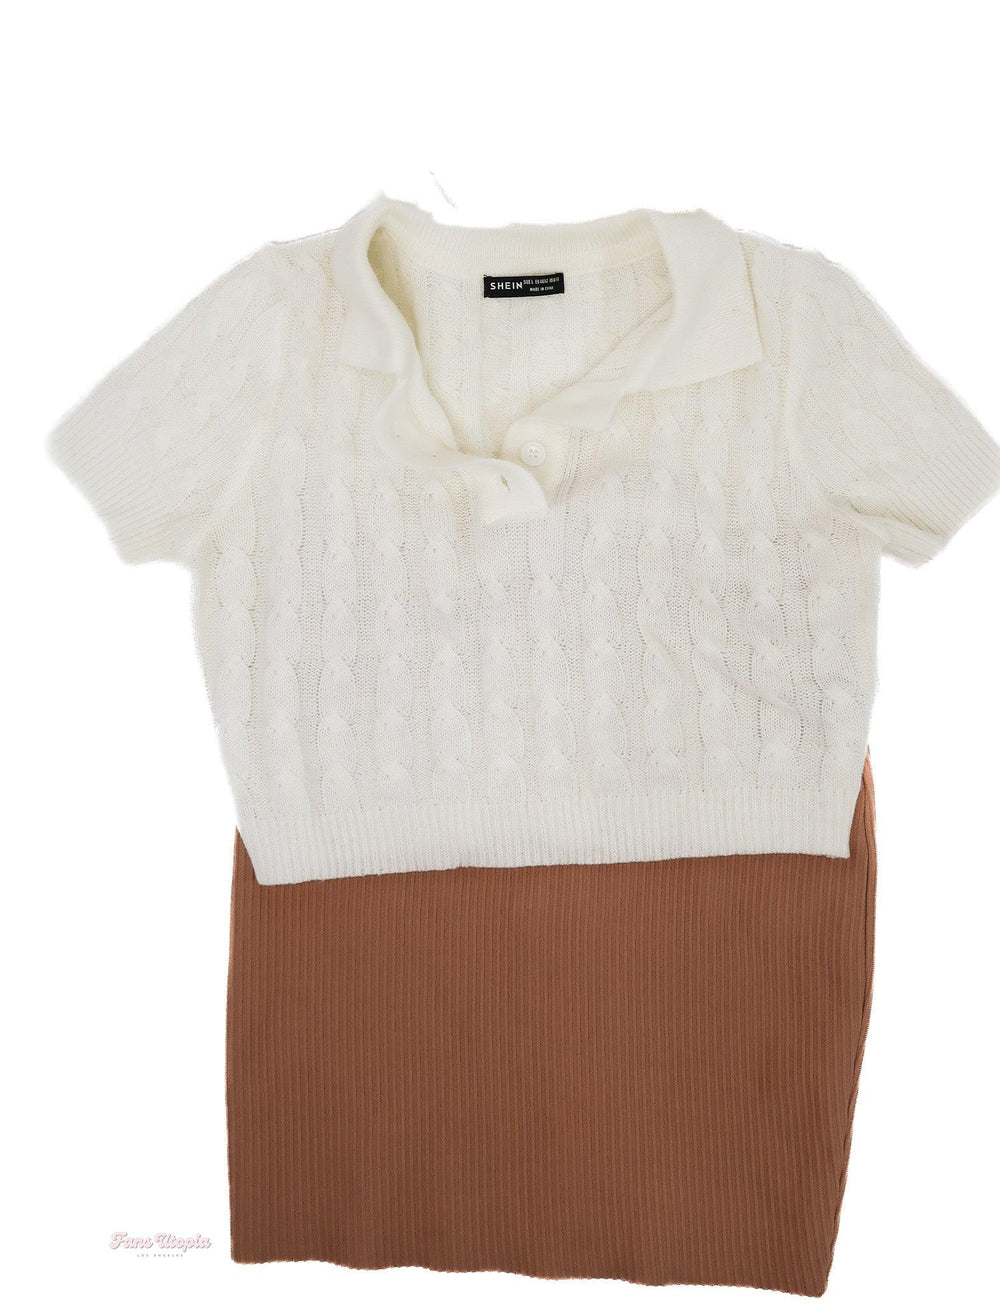 Rachael Cavalli White Shirt + Skirt Outfit - FANS UTOPIA